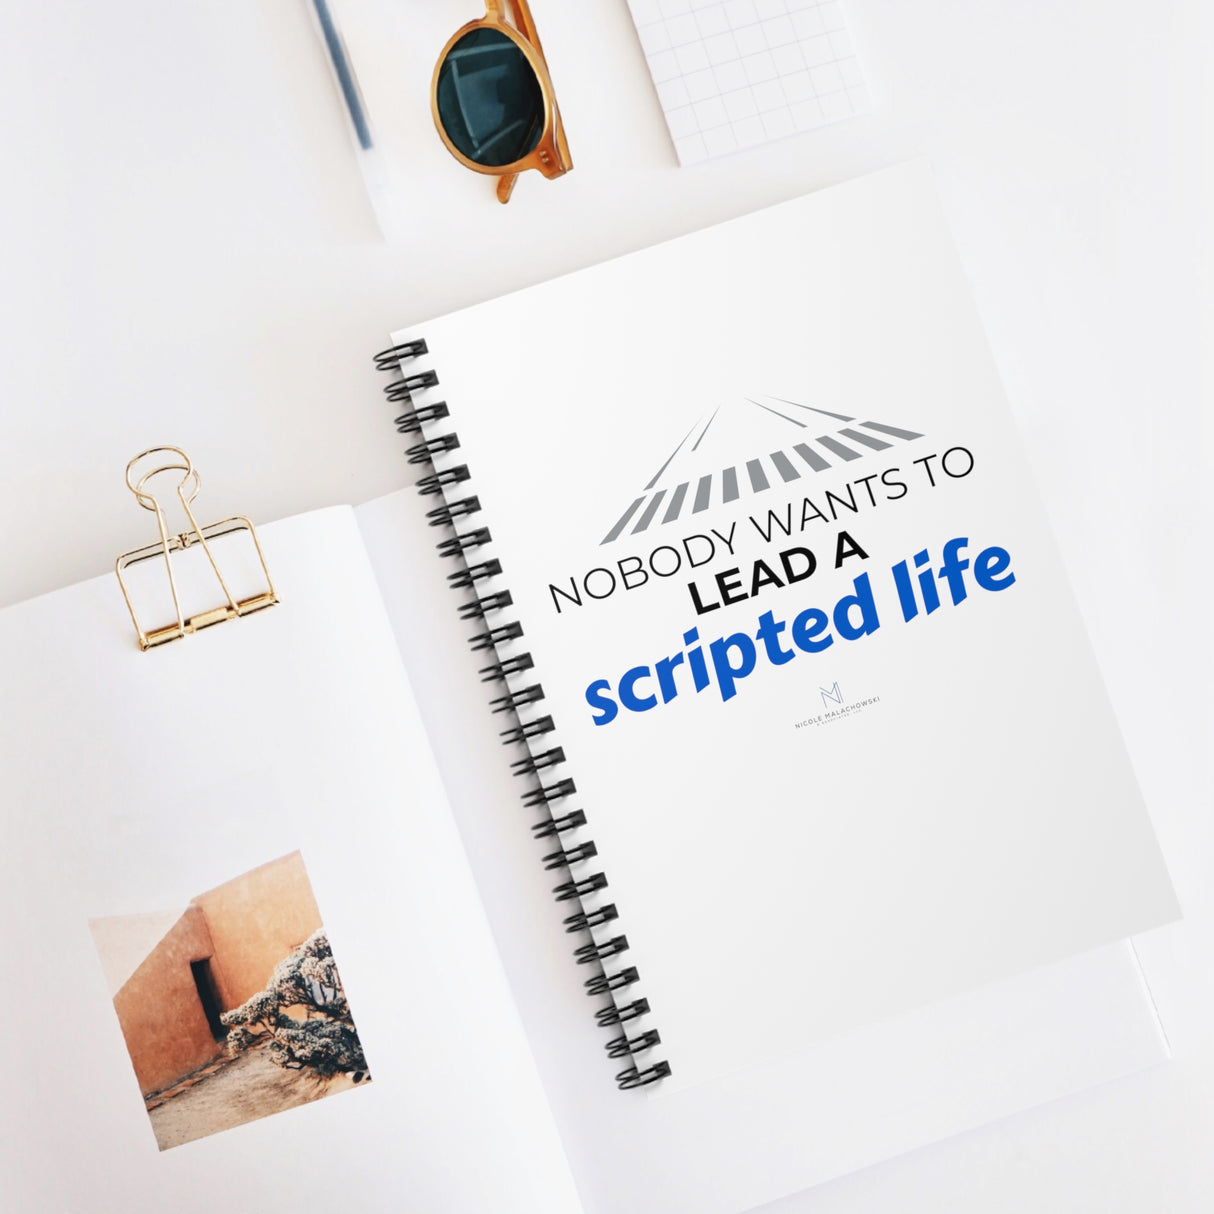 "Scripted Life" Spiral Notebook